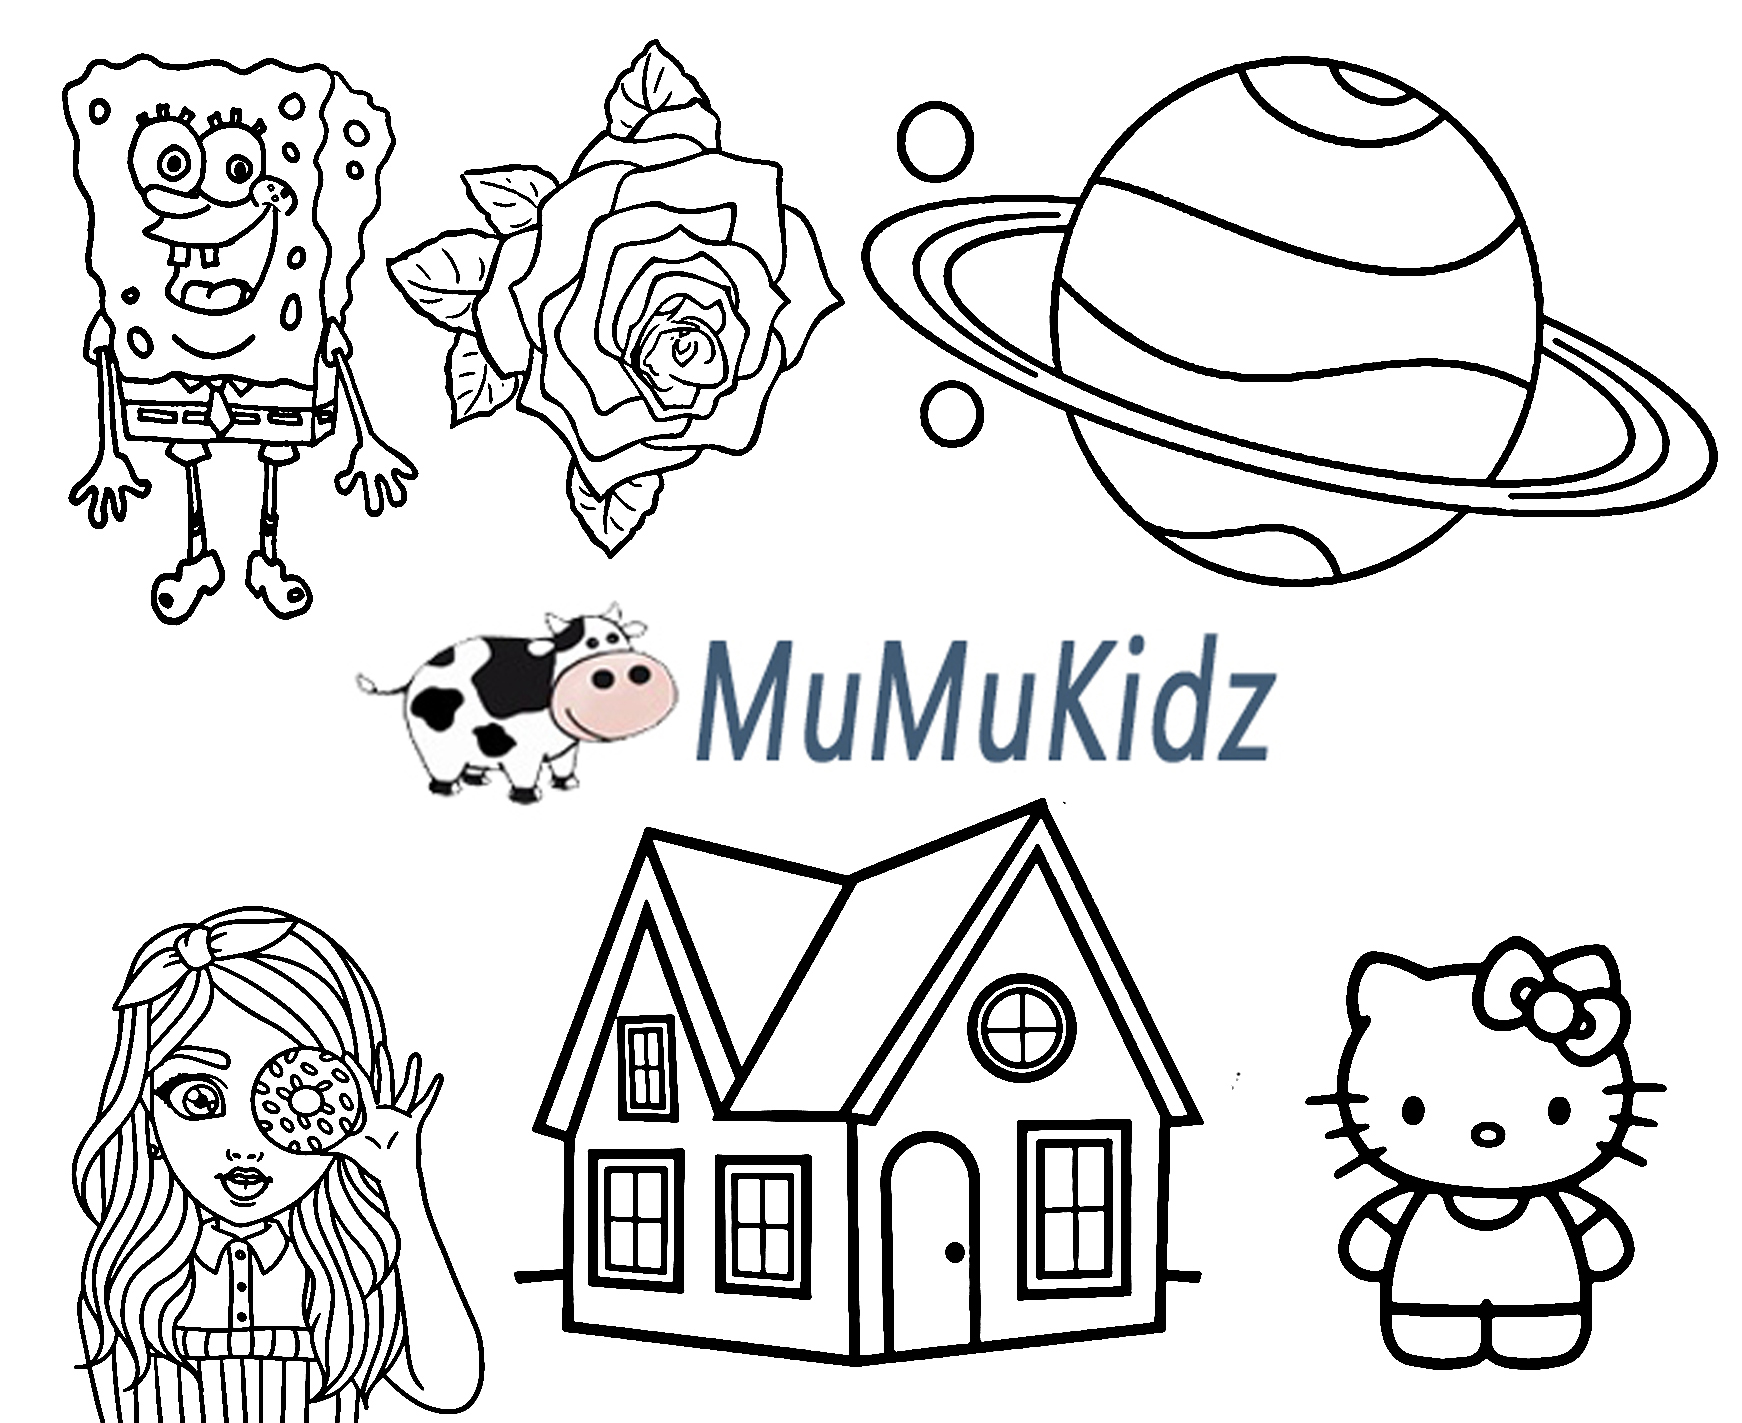 MuMuKidz Coloring Pages